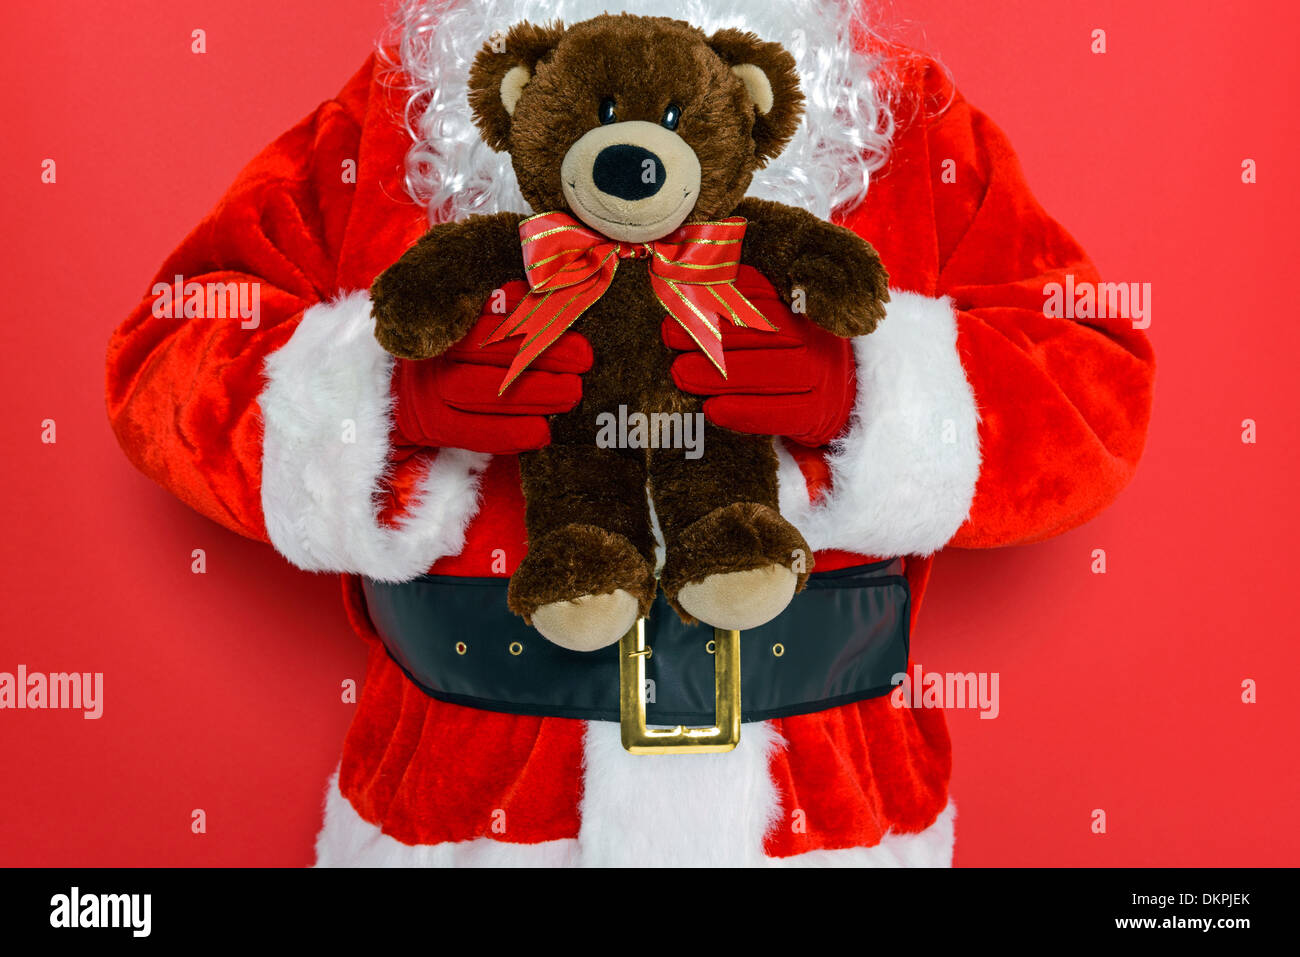 Santa Claus or Father Christmas holding a handmade teddy bear with bow. Stock Photo